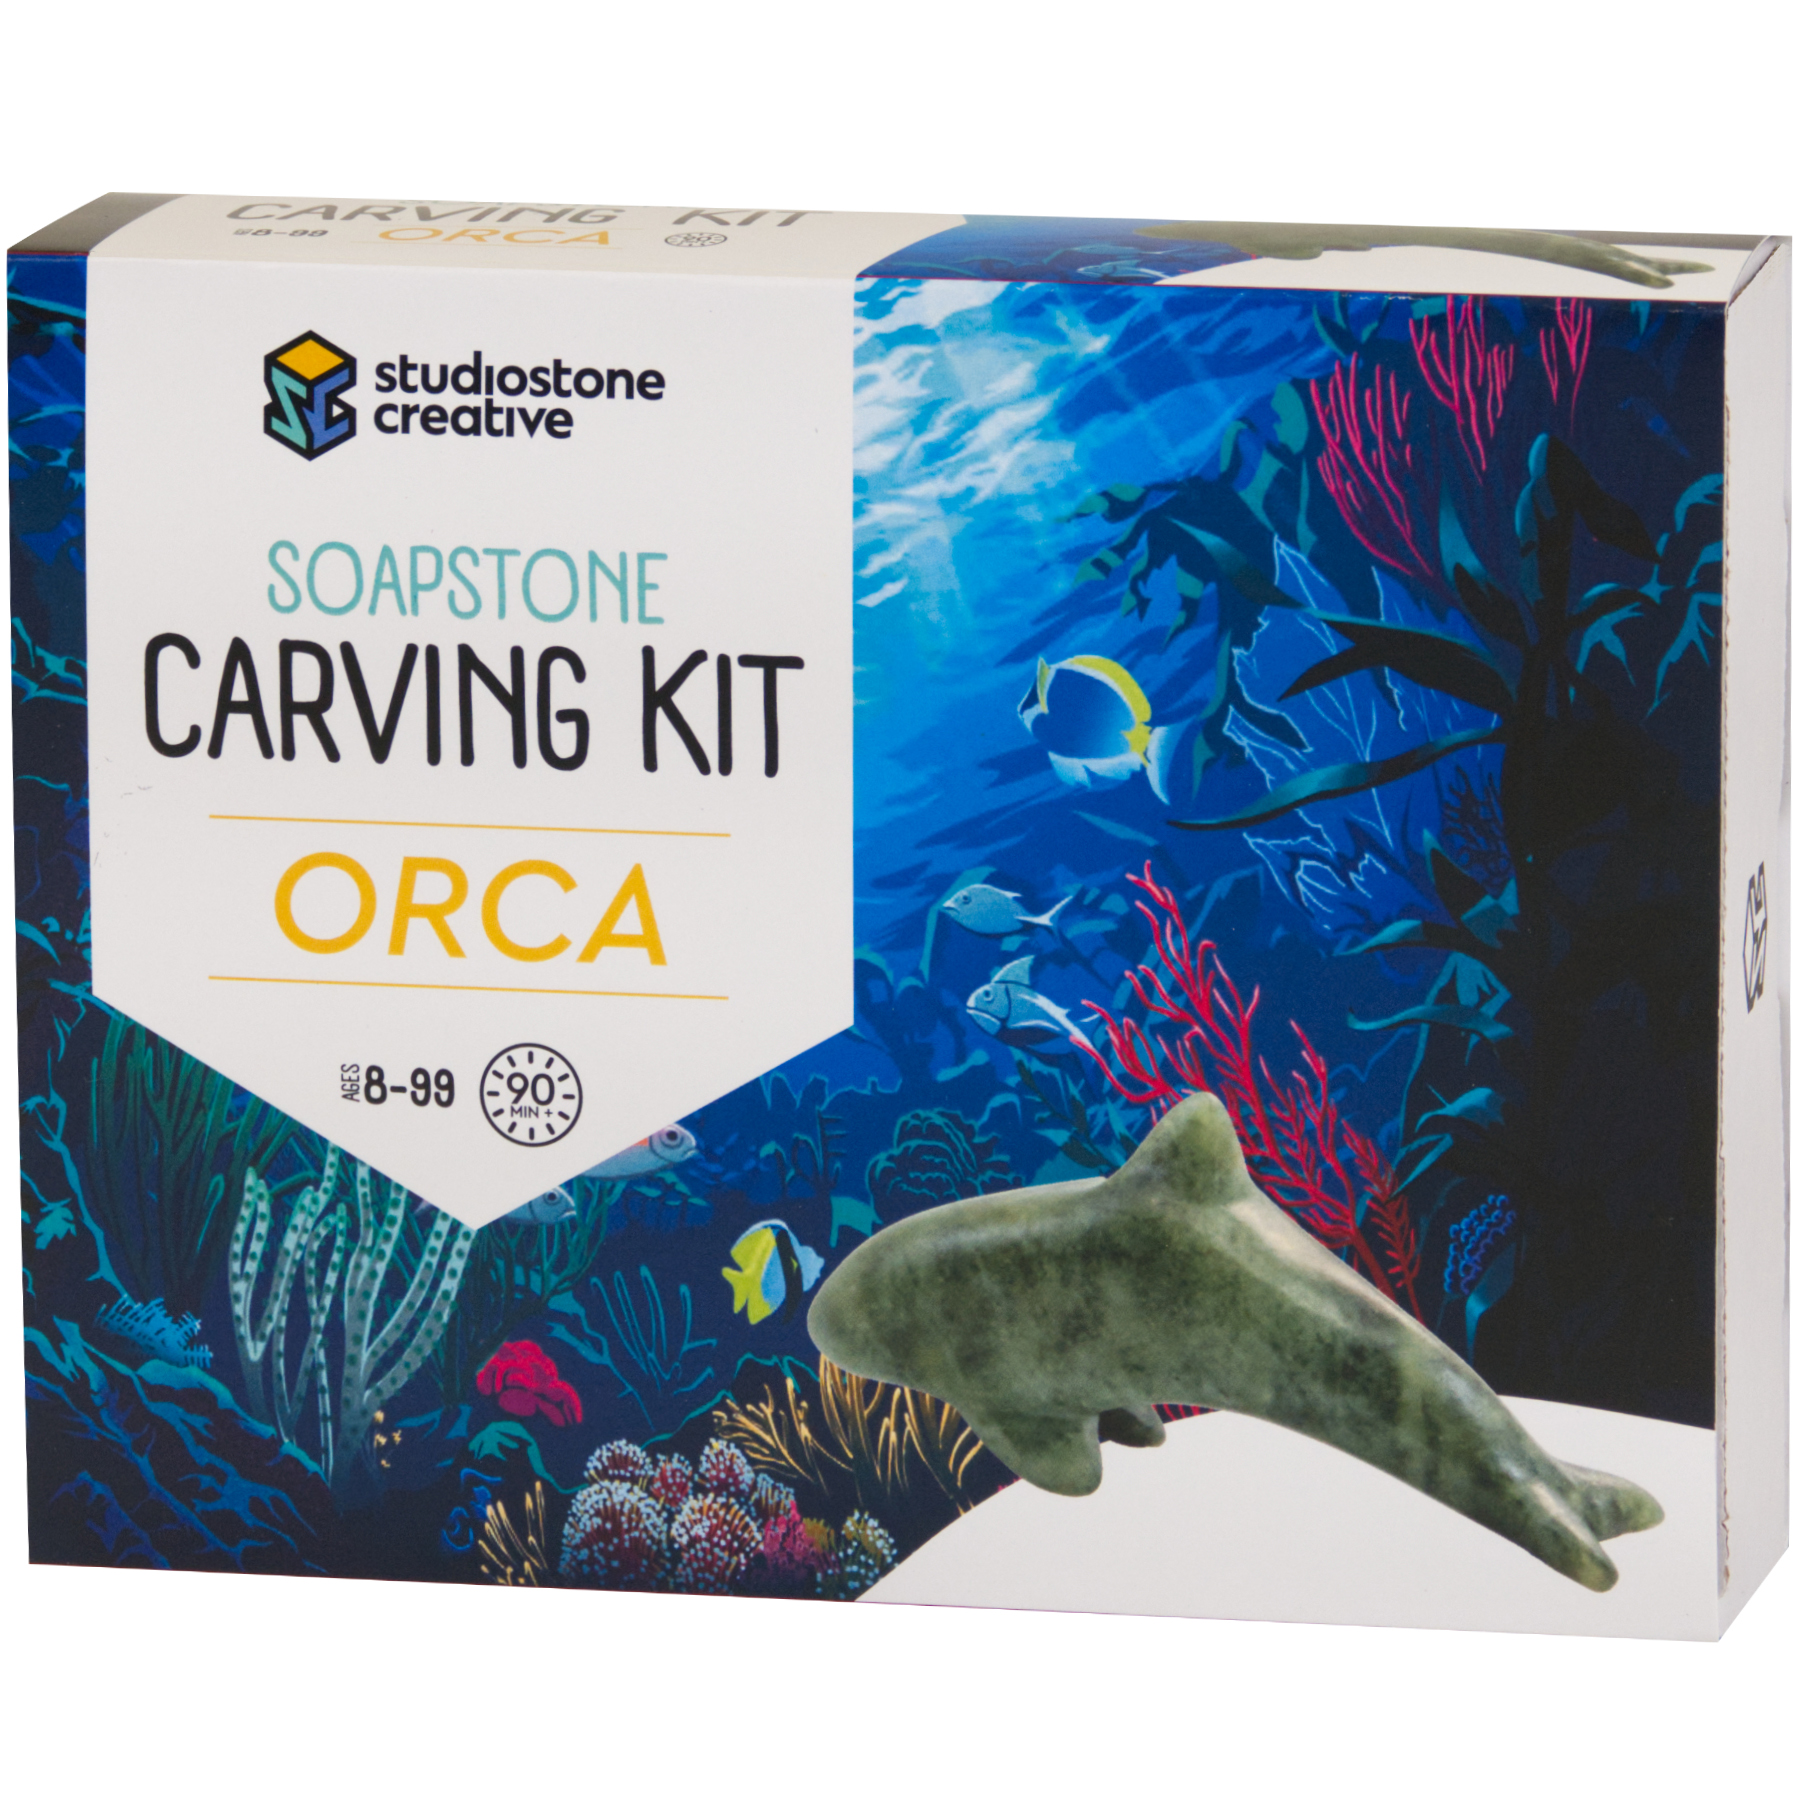 Studiostone Creative Orca Soapstone Carving Kit